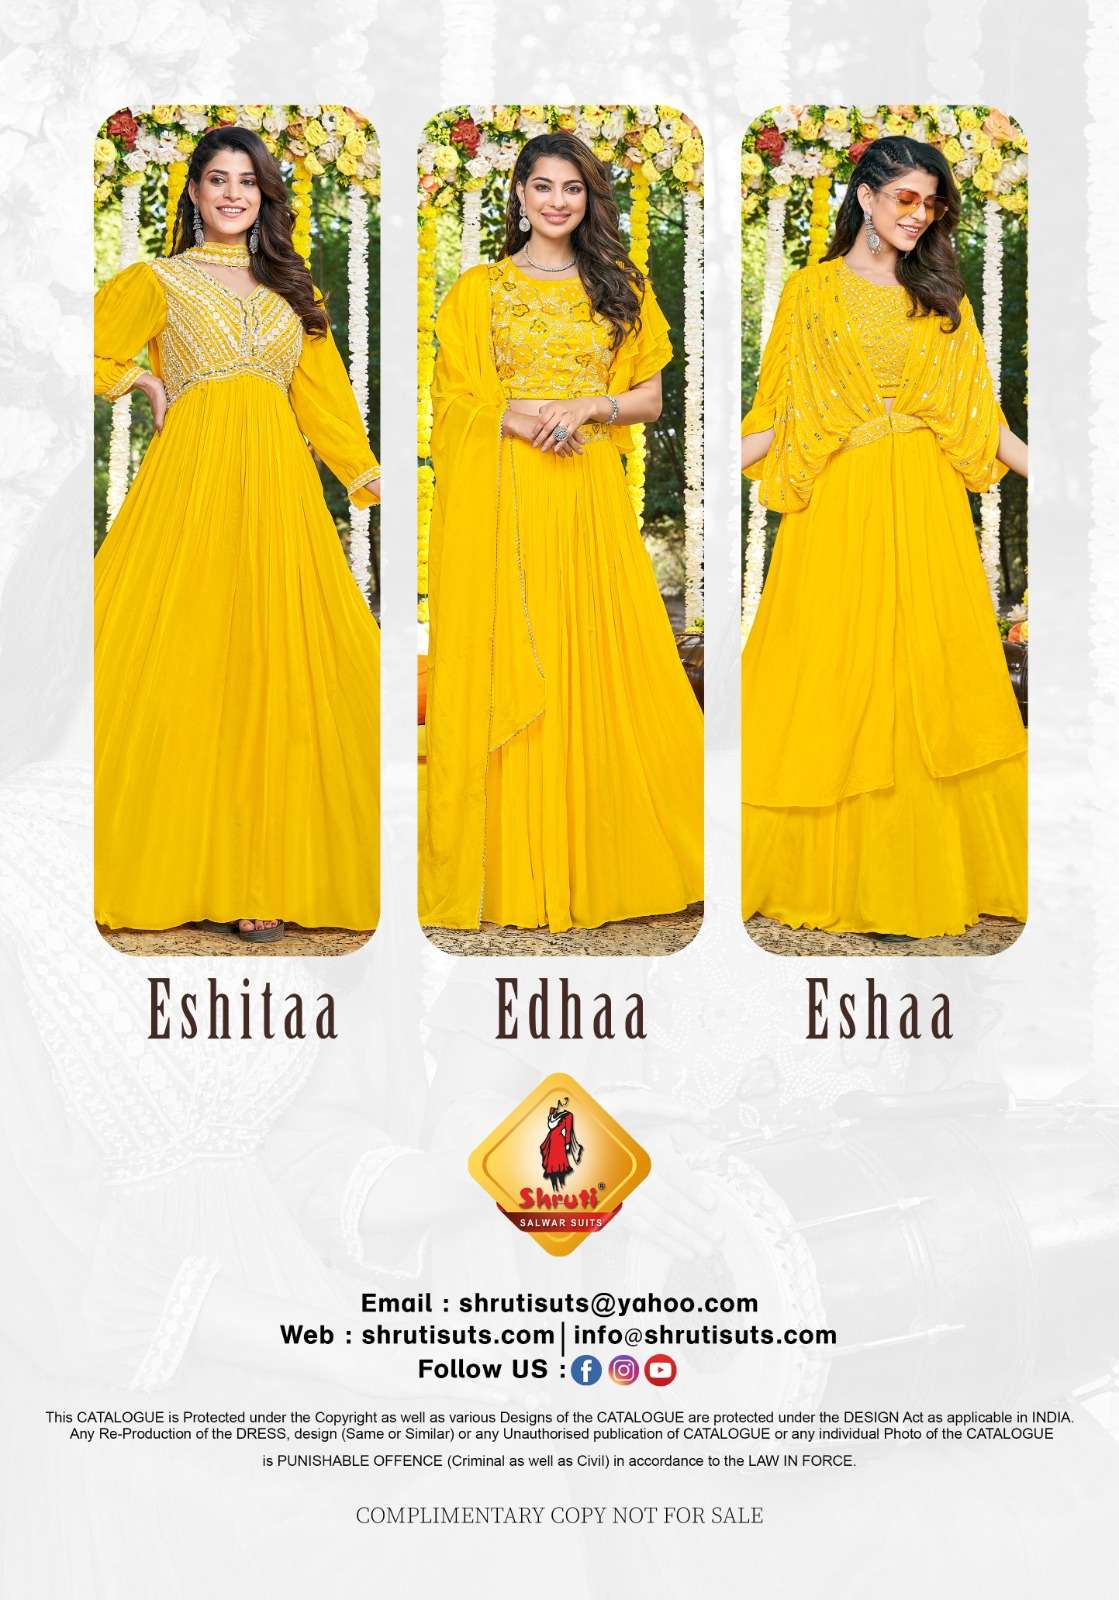 shruti haldi stylish designer haldi function special outfits latest catalogue collection wholesaler surat 